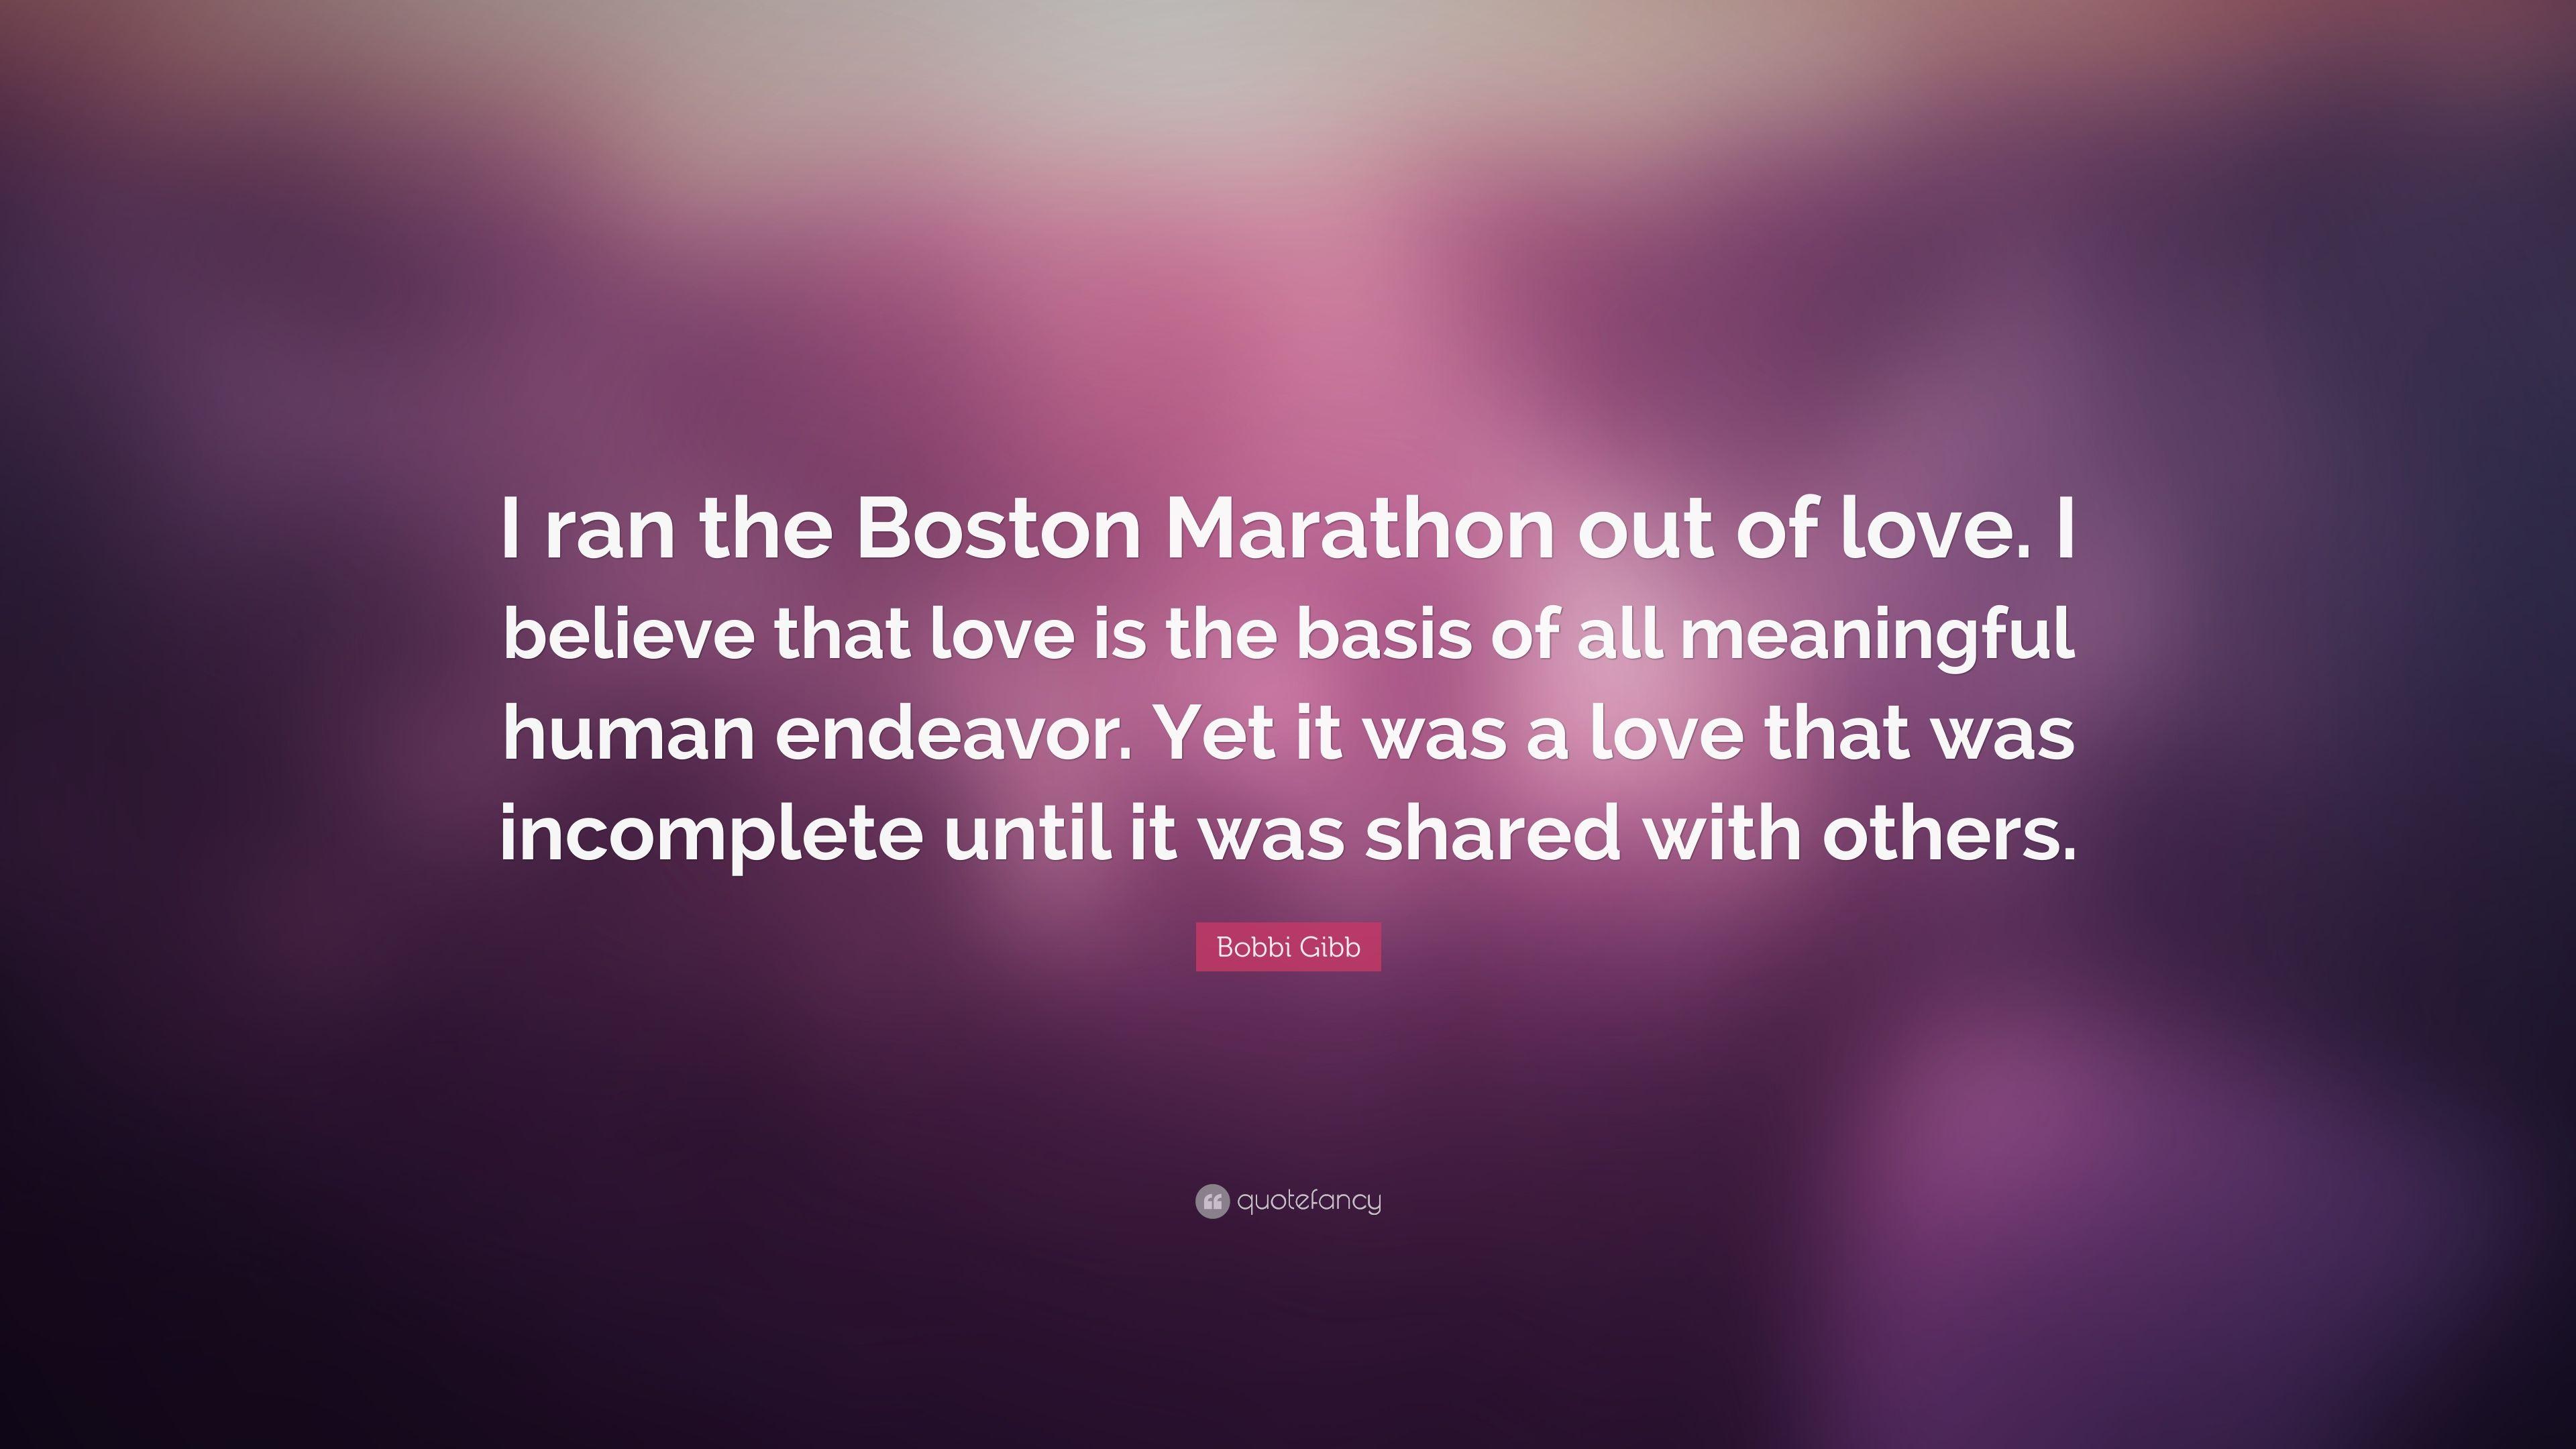 Bobbi Gibb Quote: “I ran the Boston Marathon out of love. I